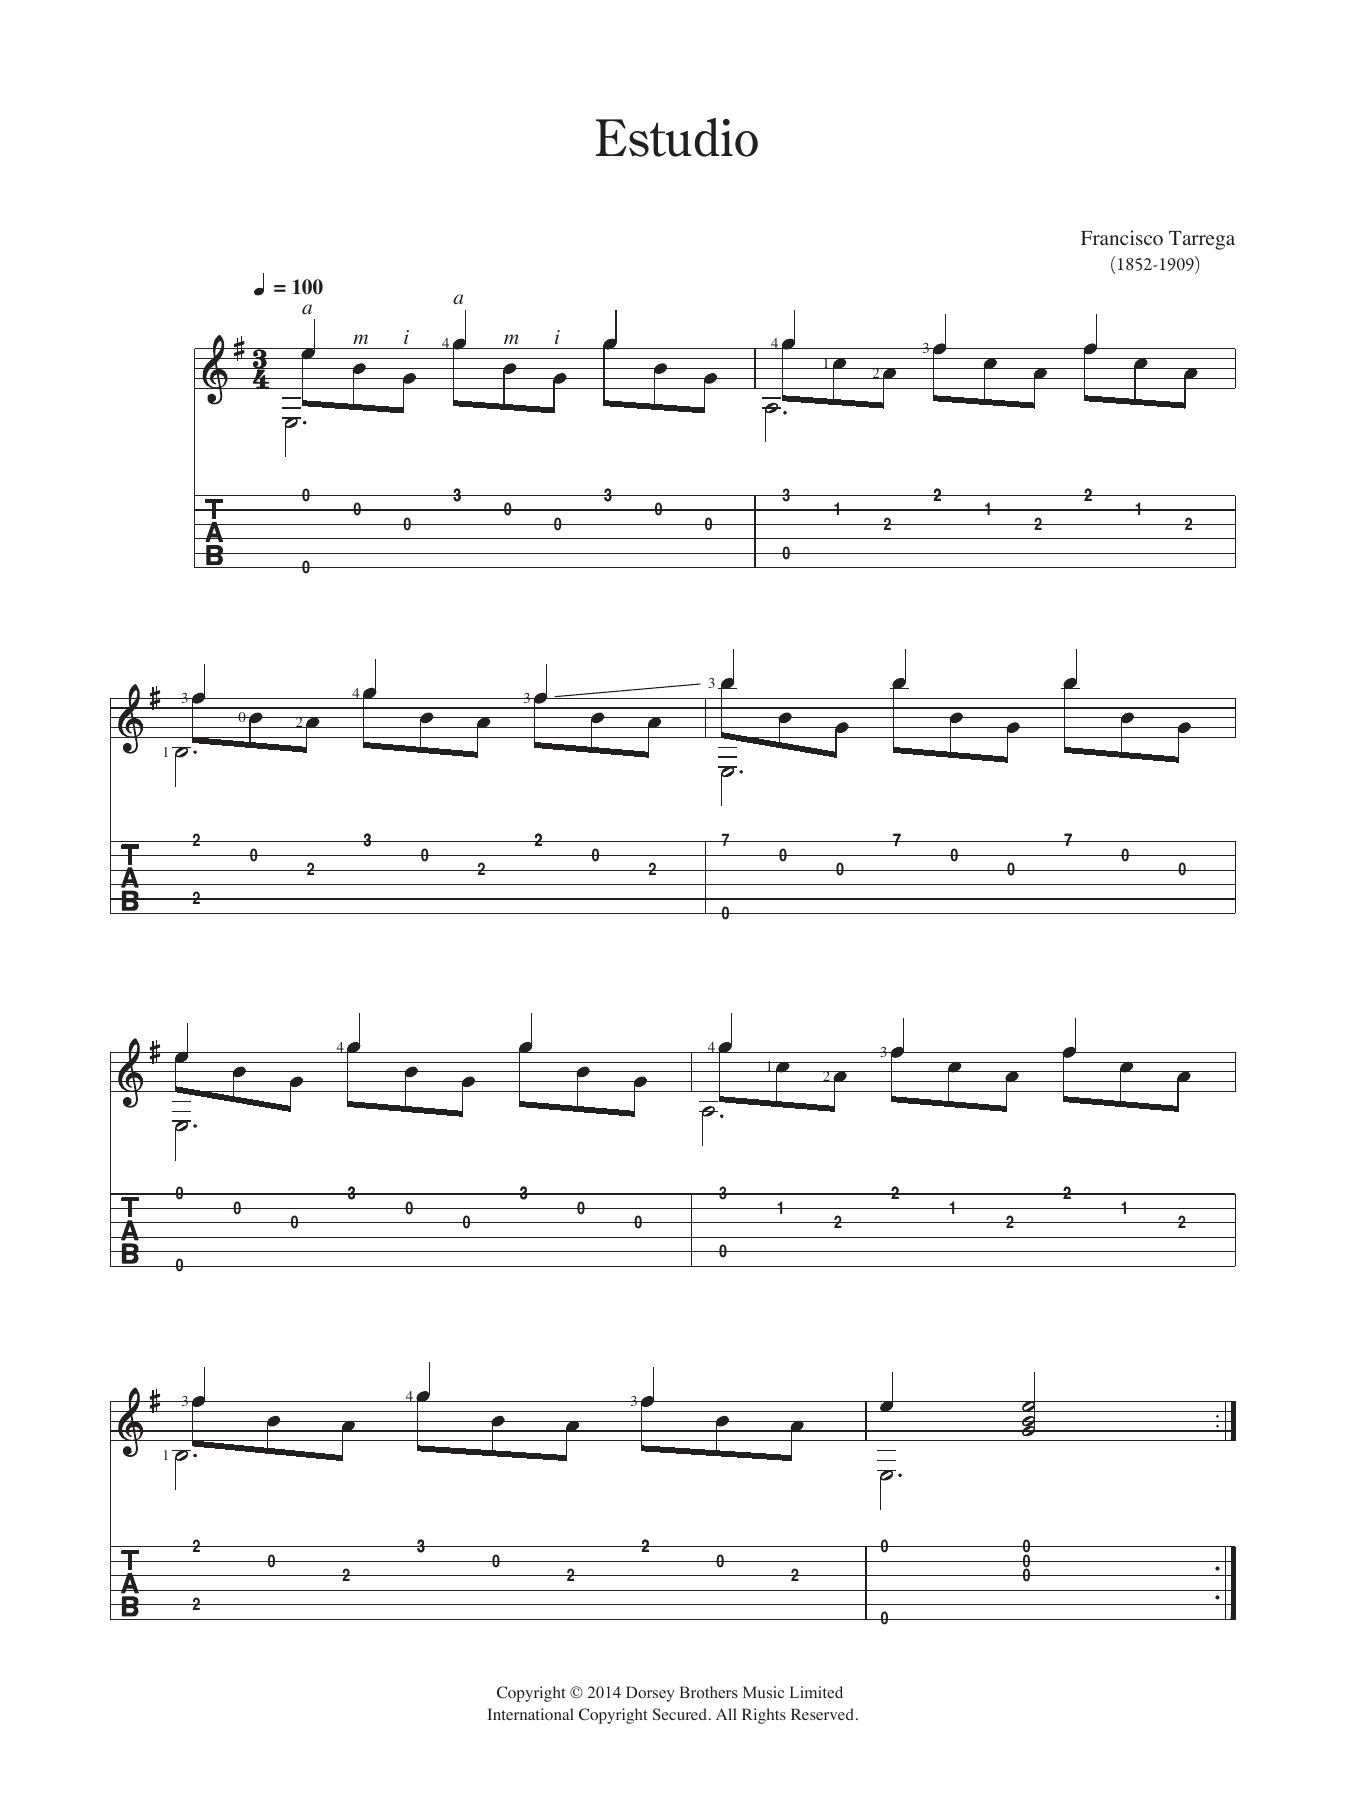 Francisco Tárrega Estudio sheet music notes and chords arranged for Easy Guitar